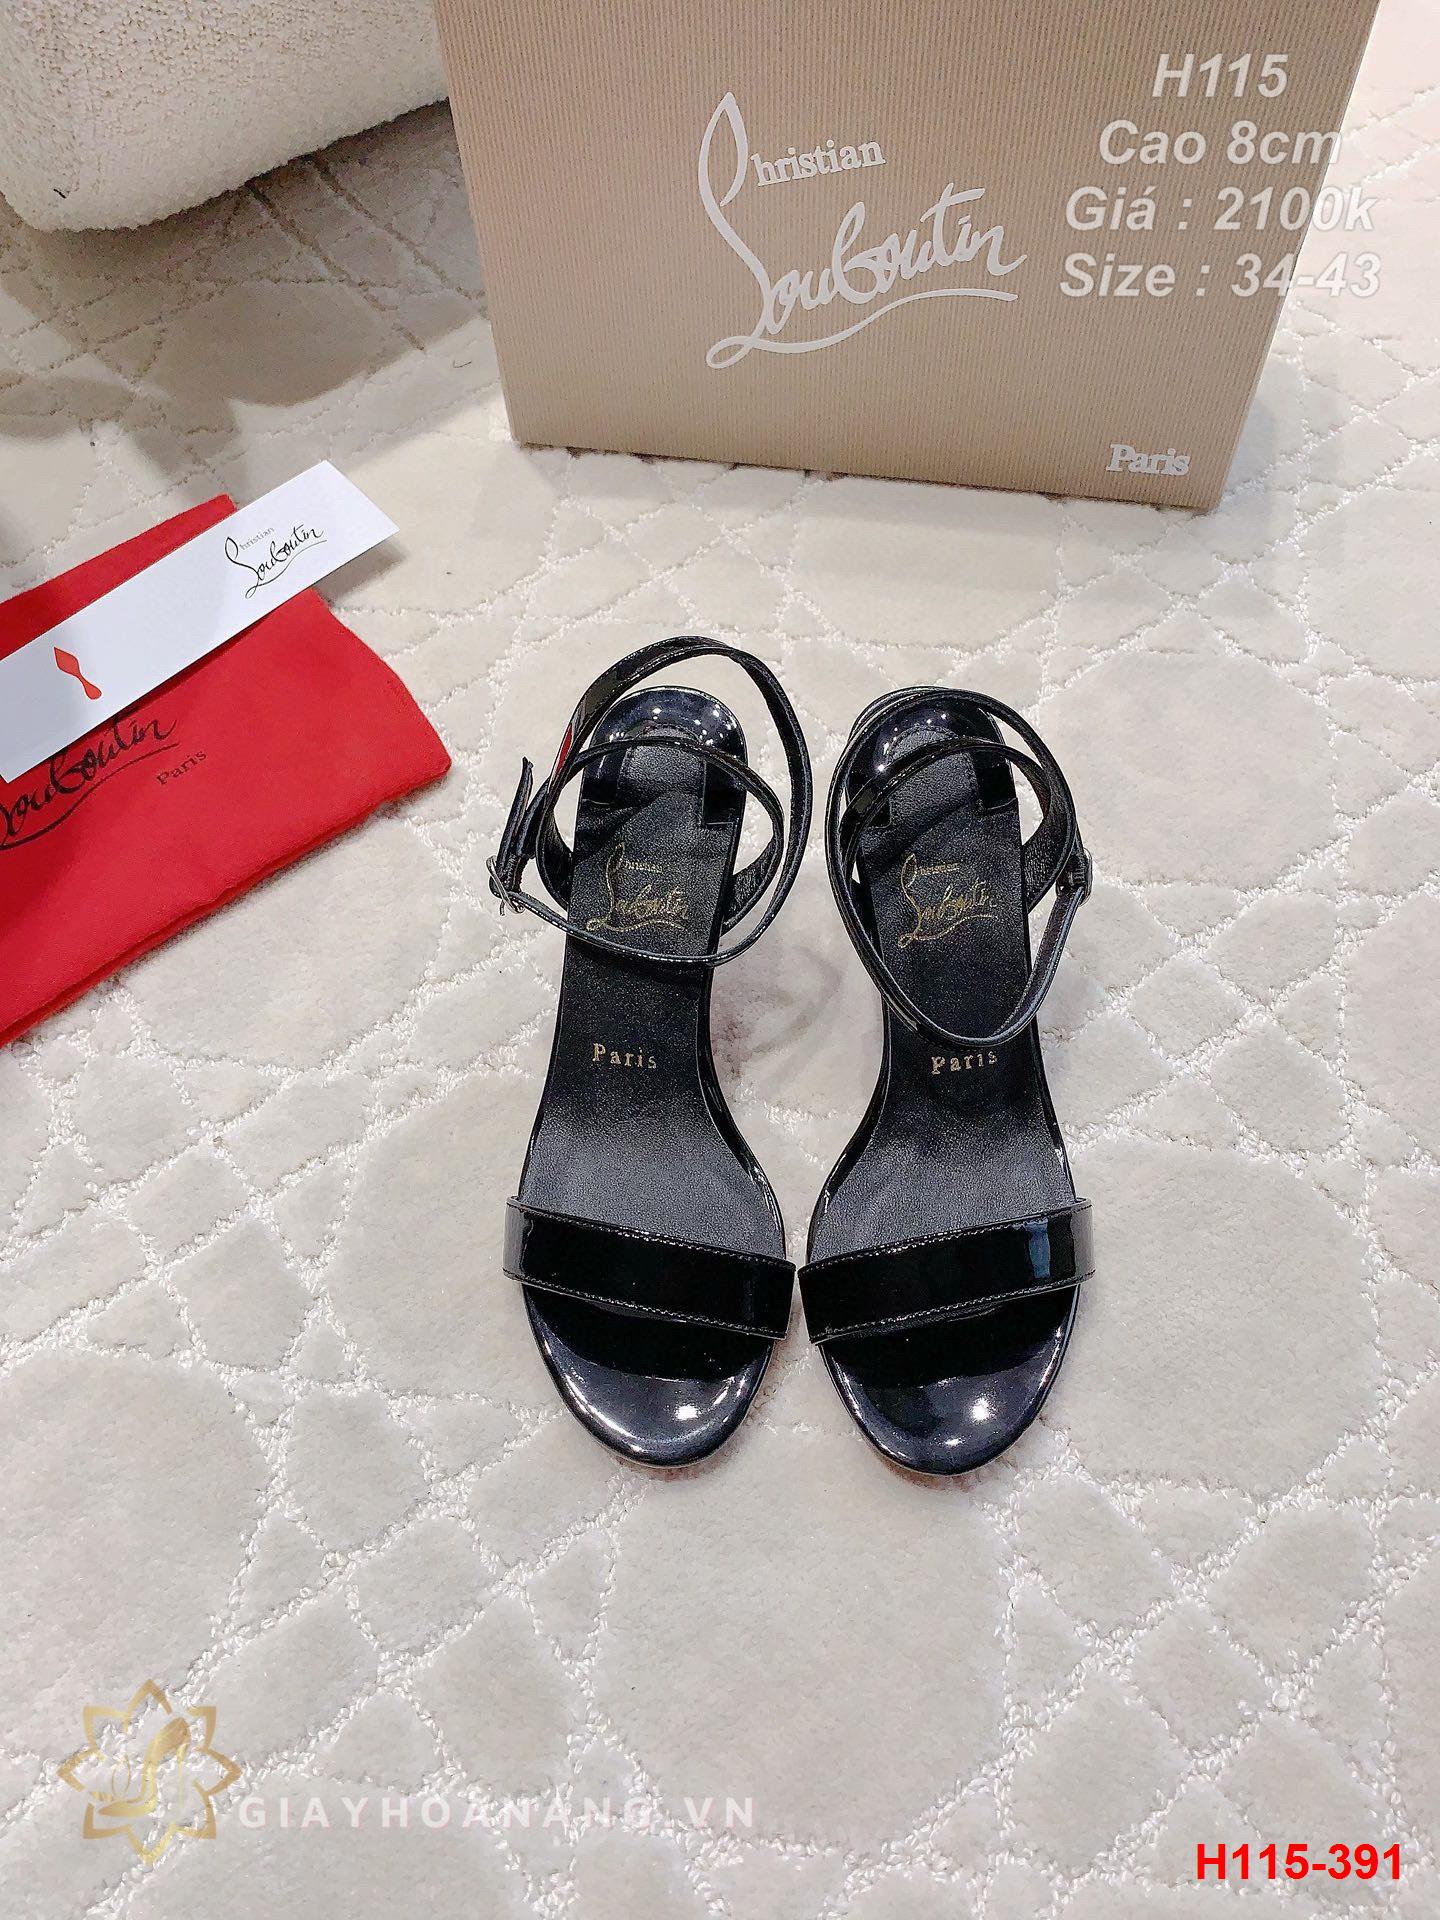 H115-391 Louboutin sandal cao gót 8cm siêu cấp